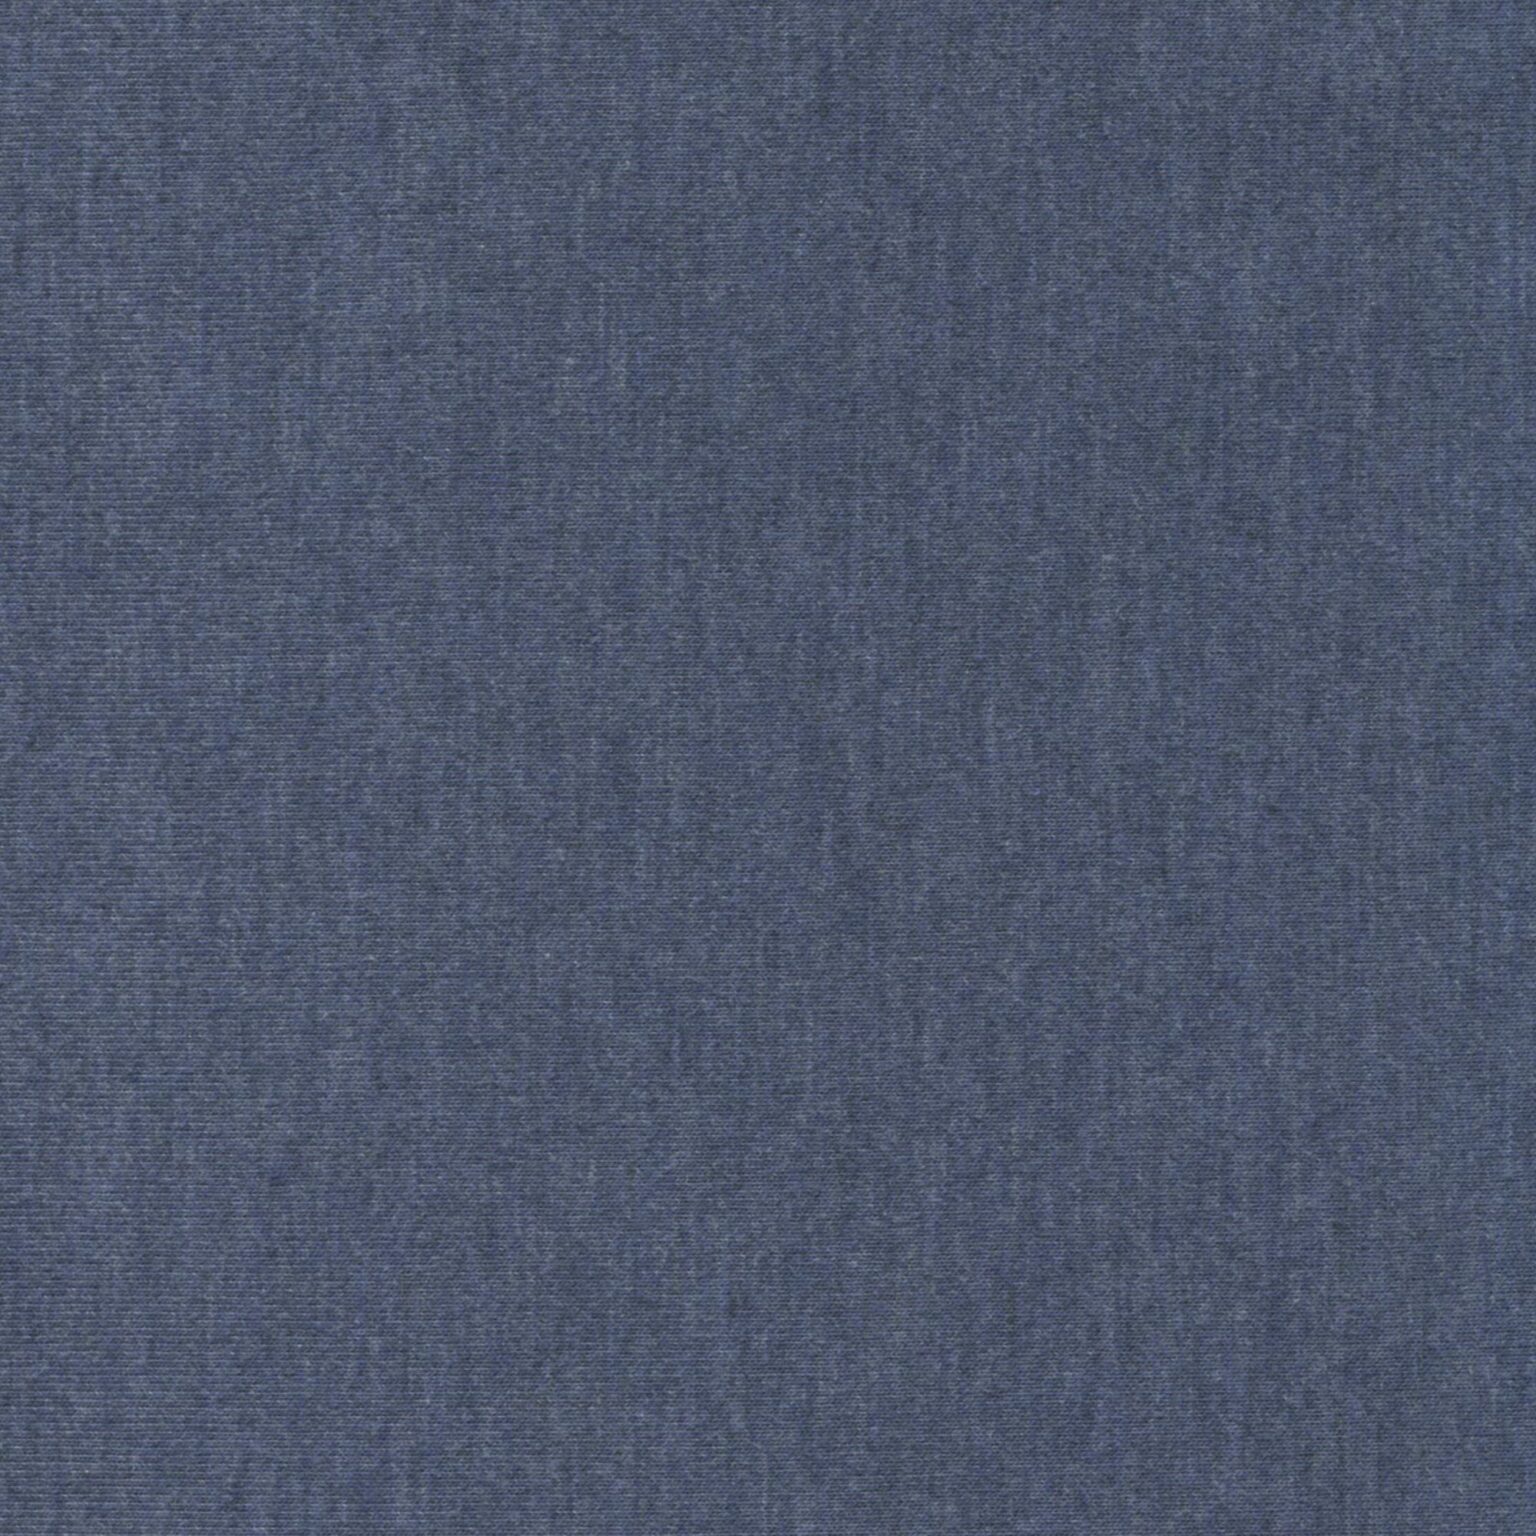 melange dark blue jersey fabric | More Sewing